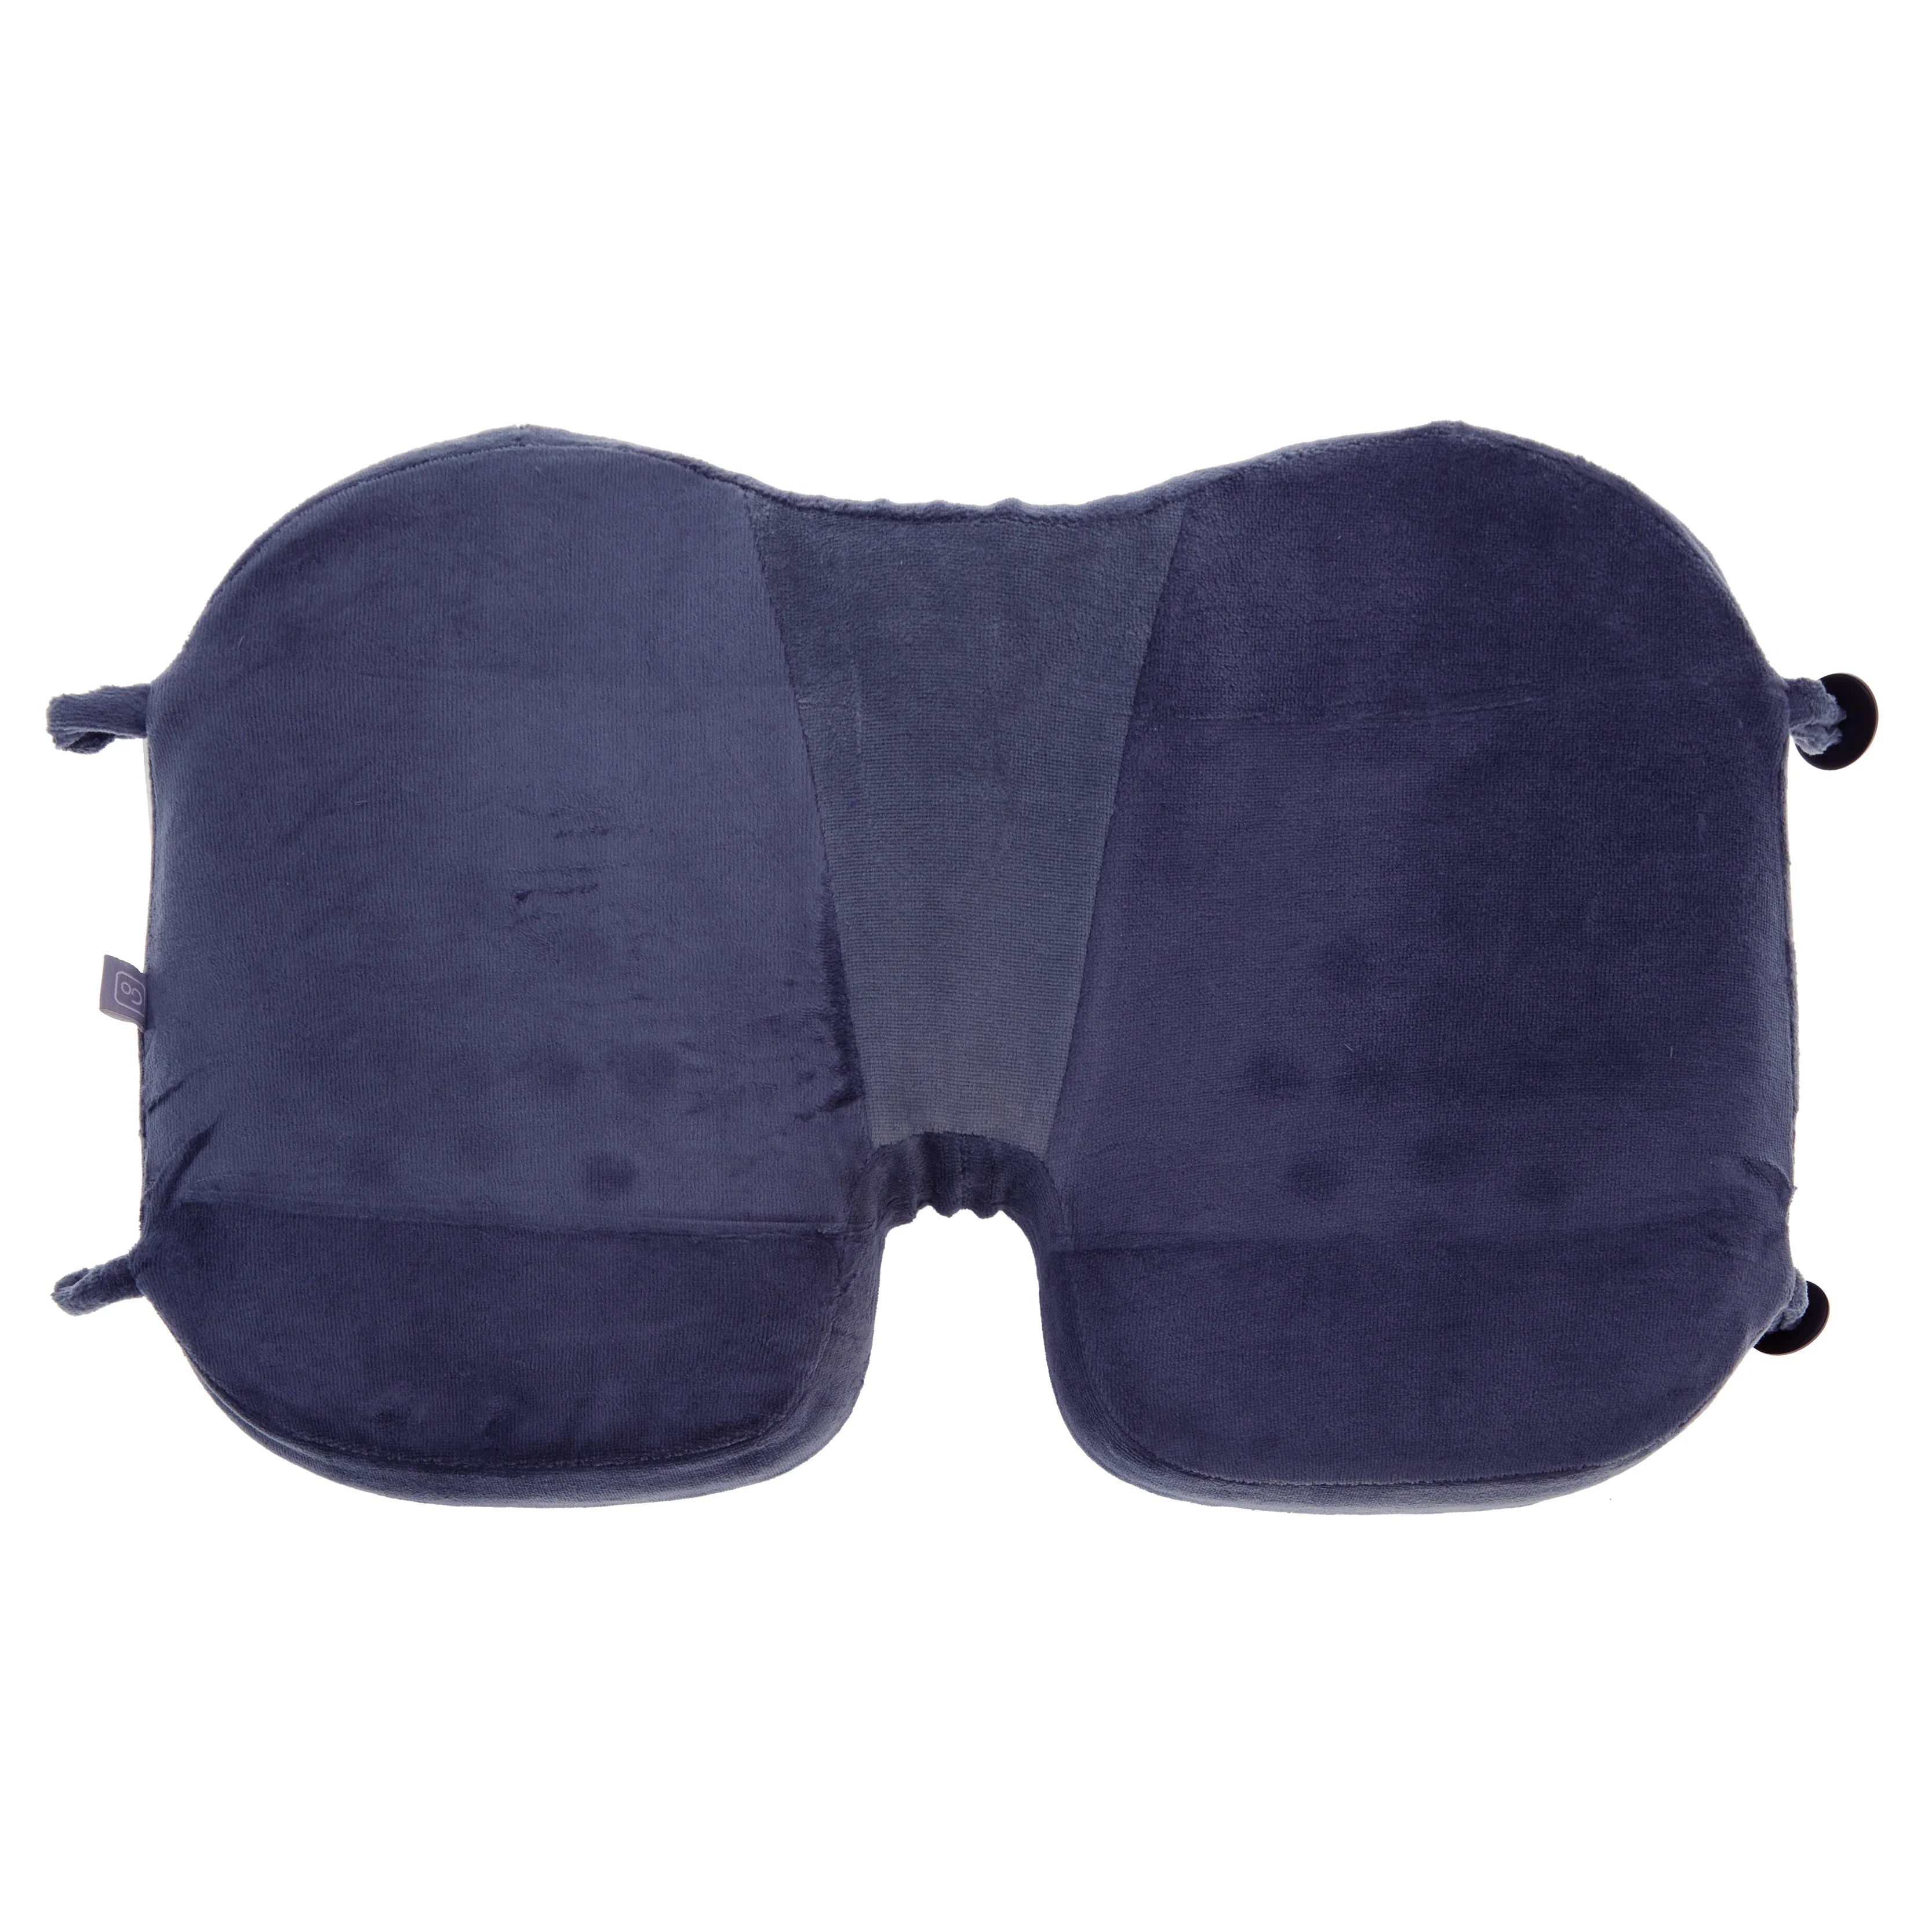 Design Go travel accessories ergonomic memory foam seat cushion - purple/lilac